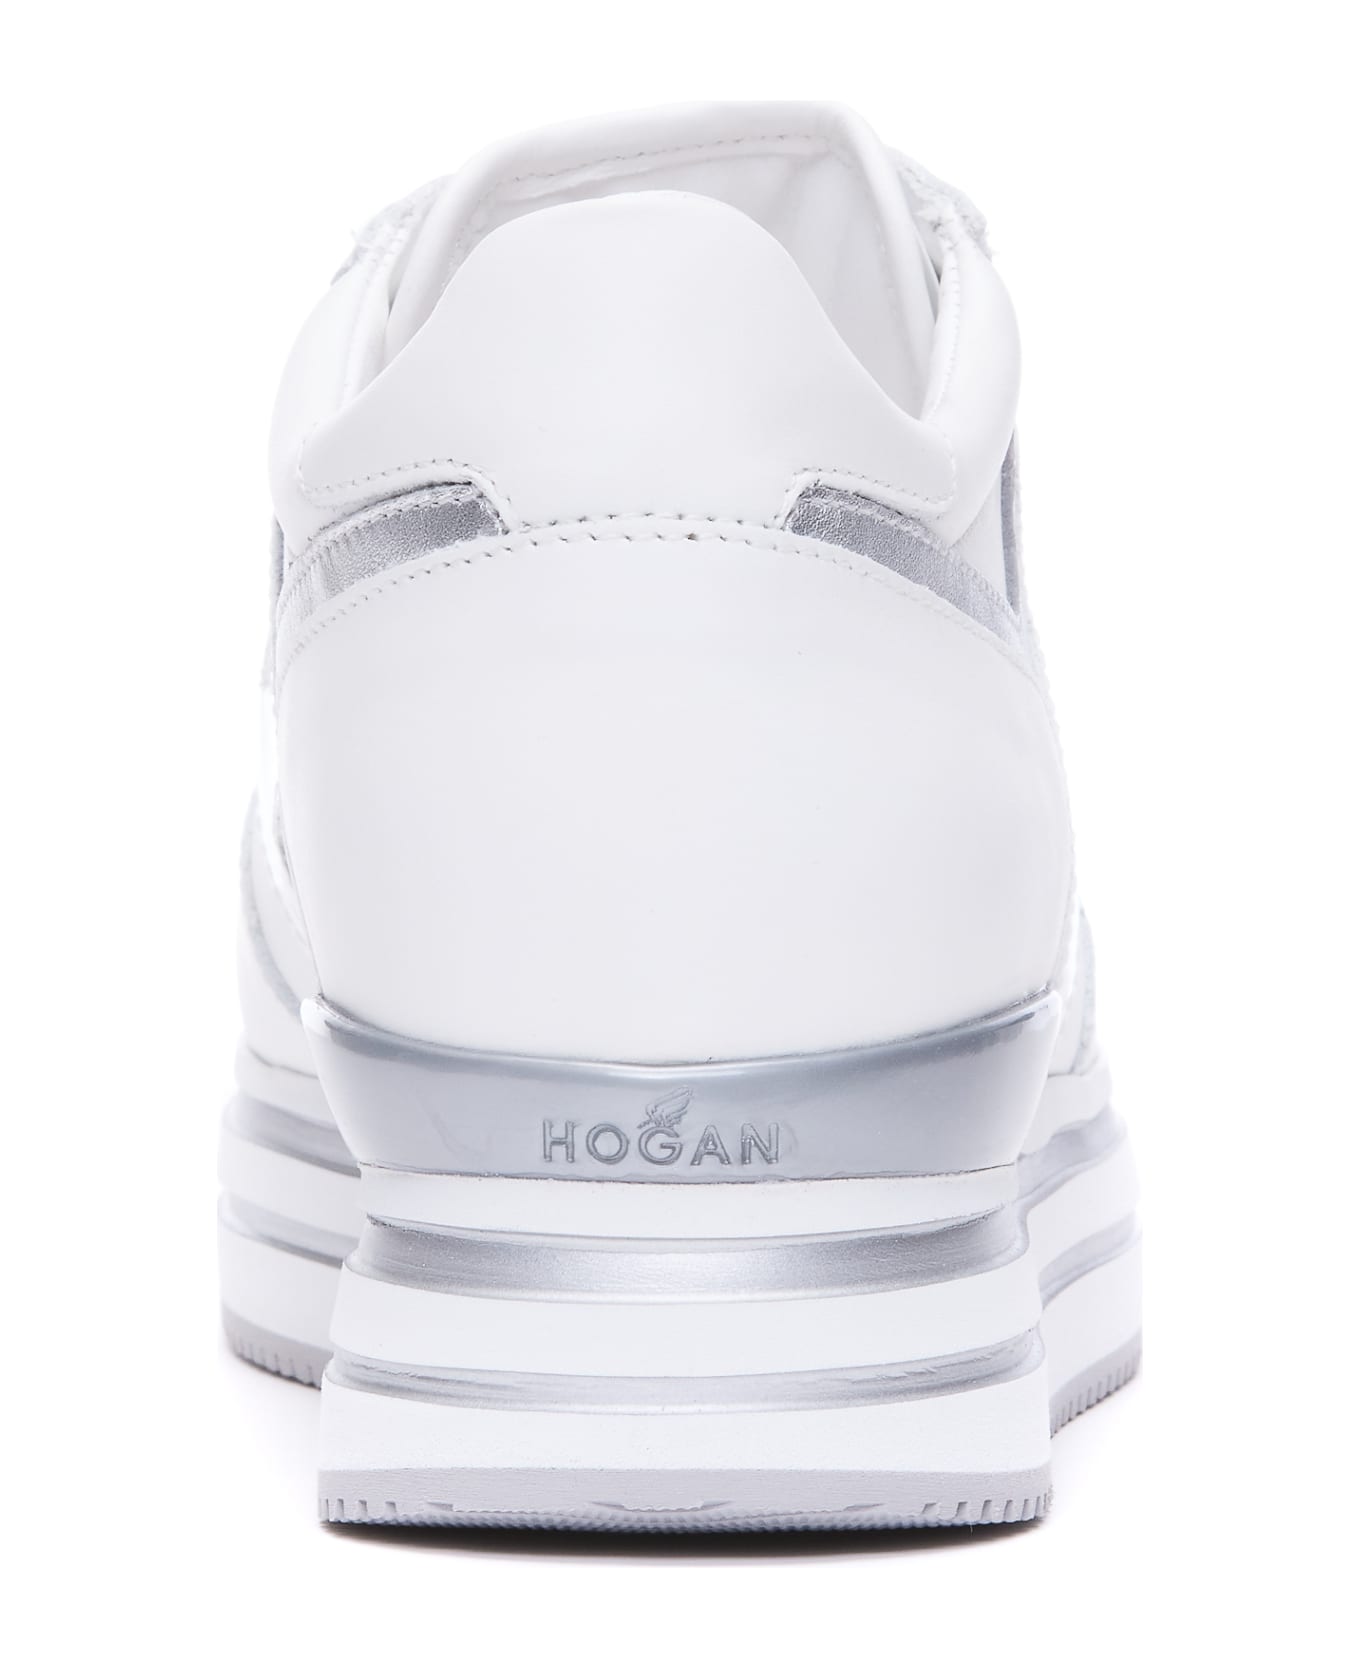 Hogan Midi Platform H483 Allacciato Sneakers - Bianco Argento